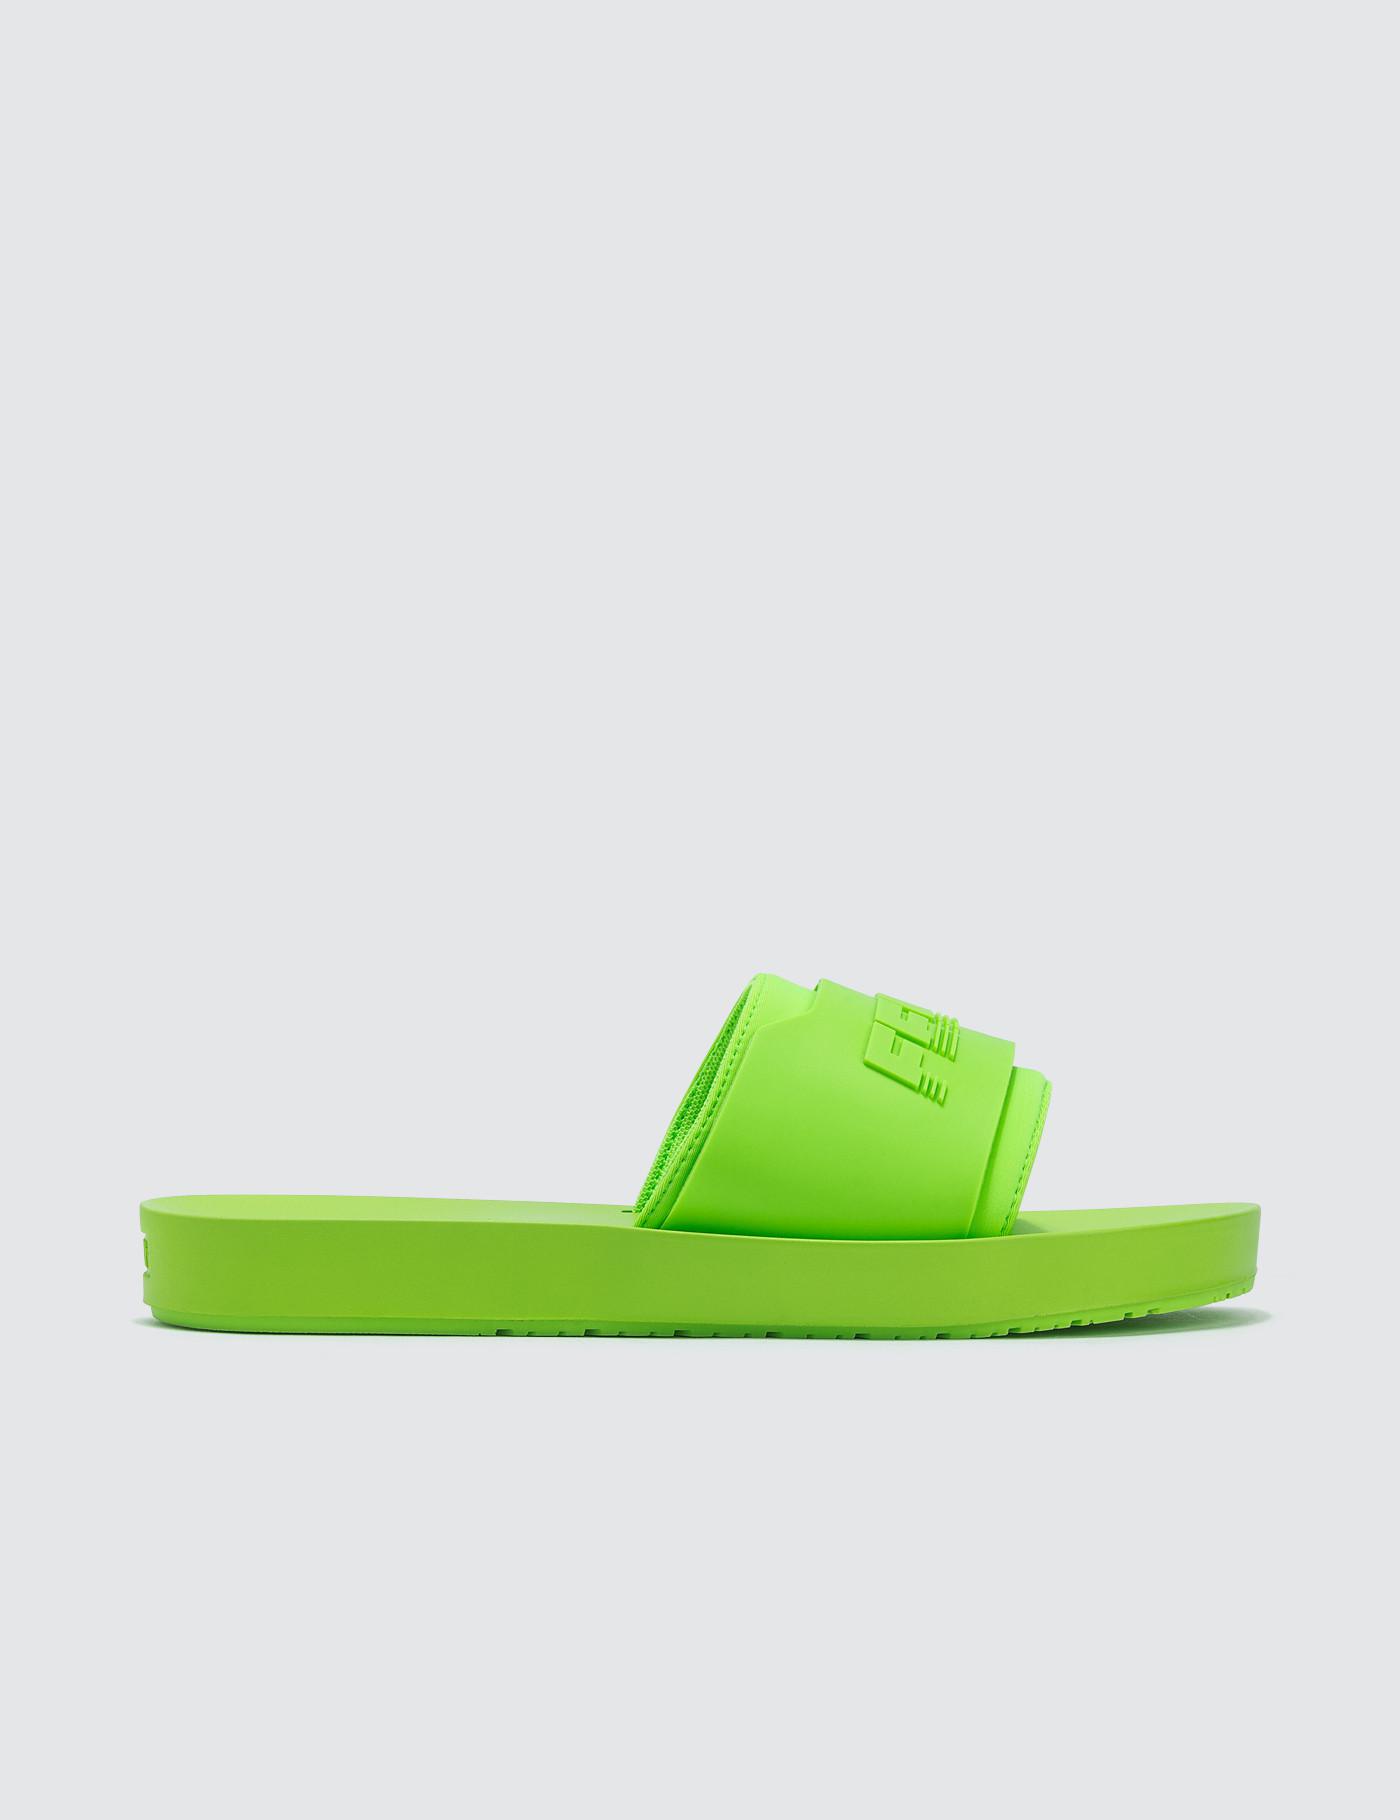 fenty puma green slides